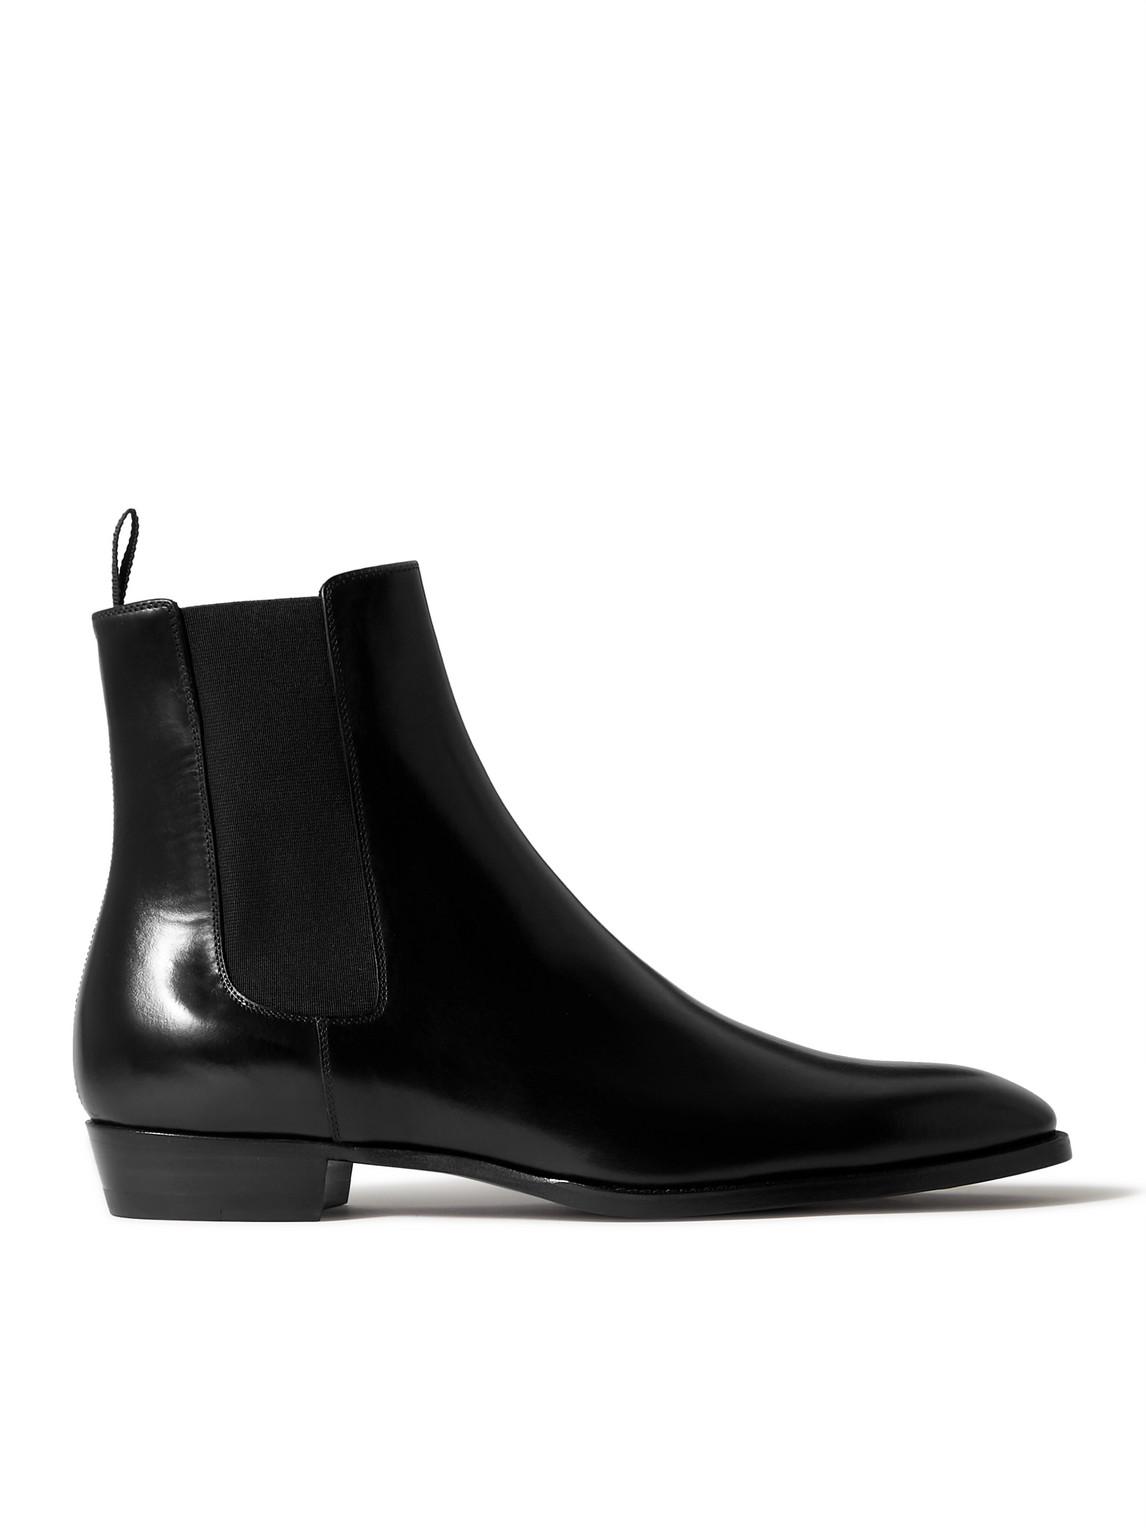 CELINE HOMME Leather Chelsea Boots in Black for Men | Lyst